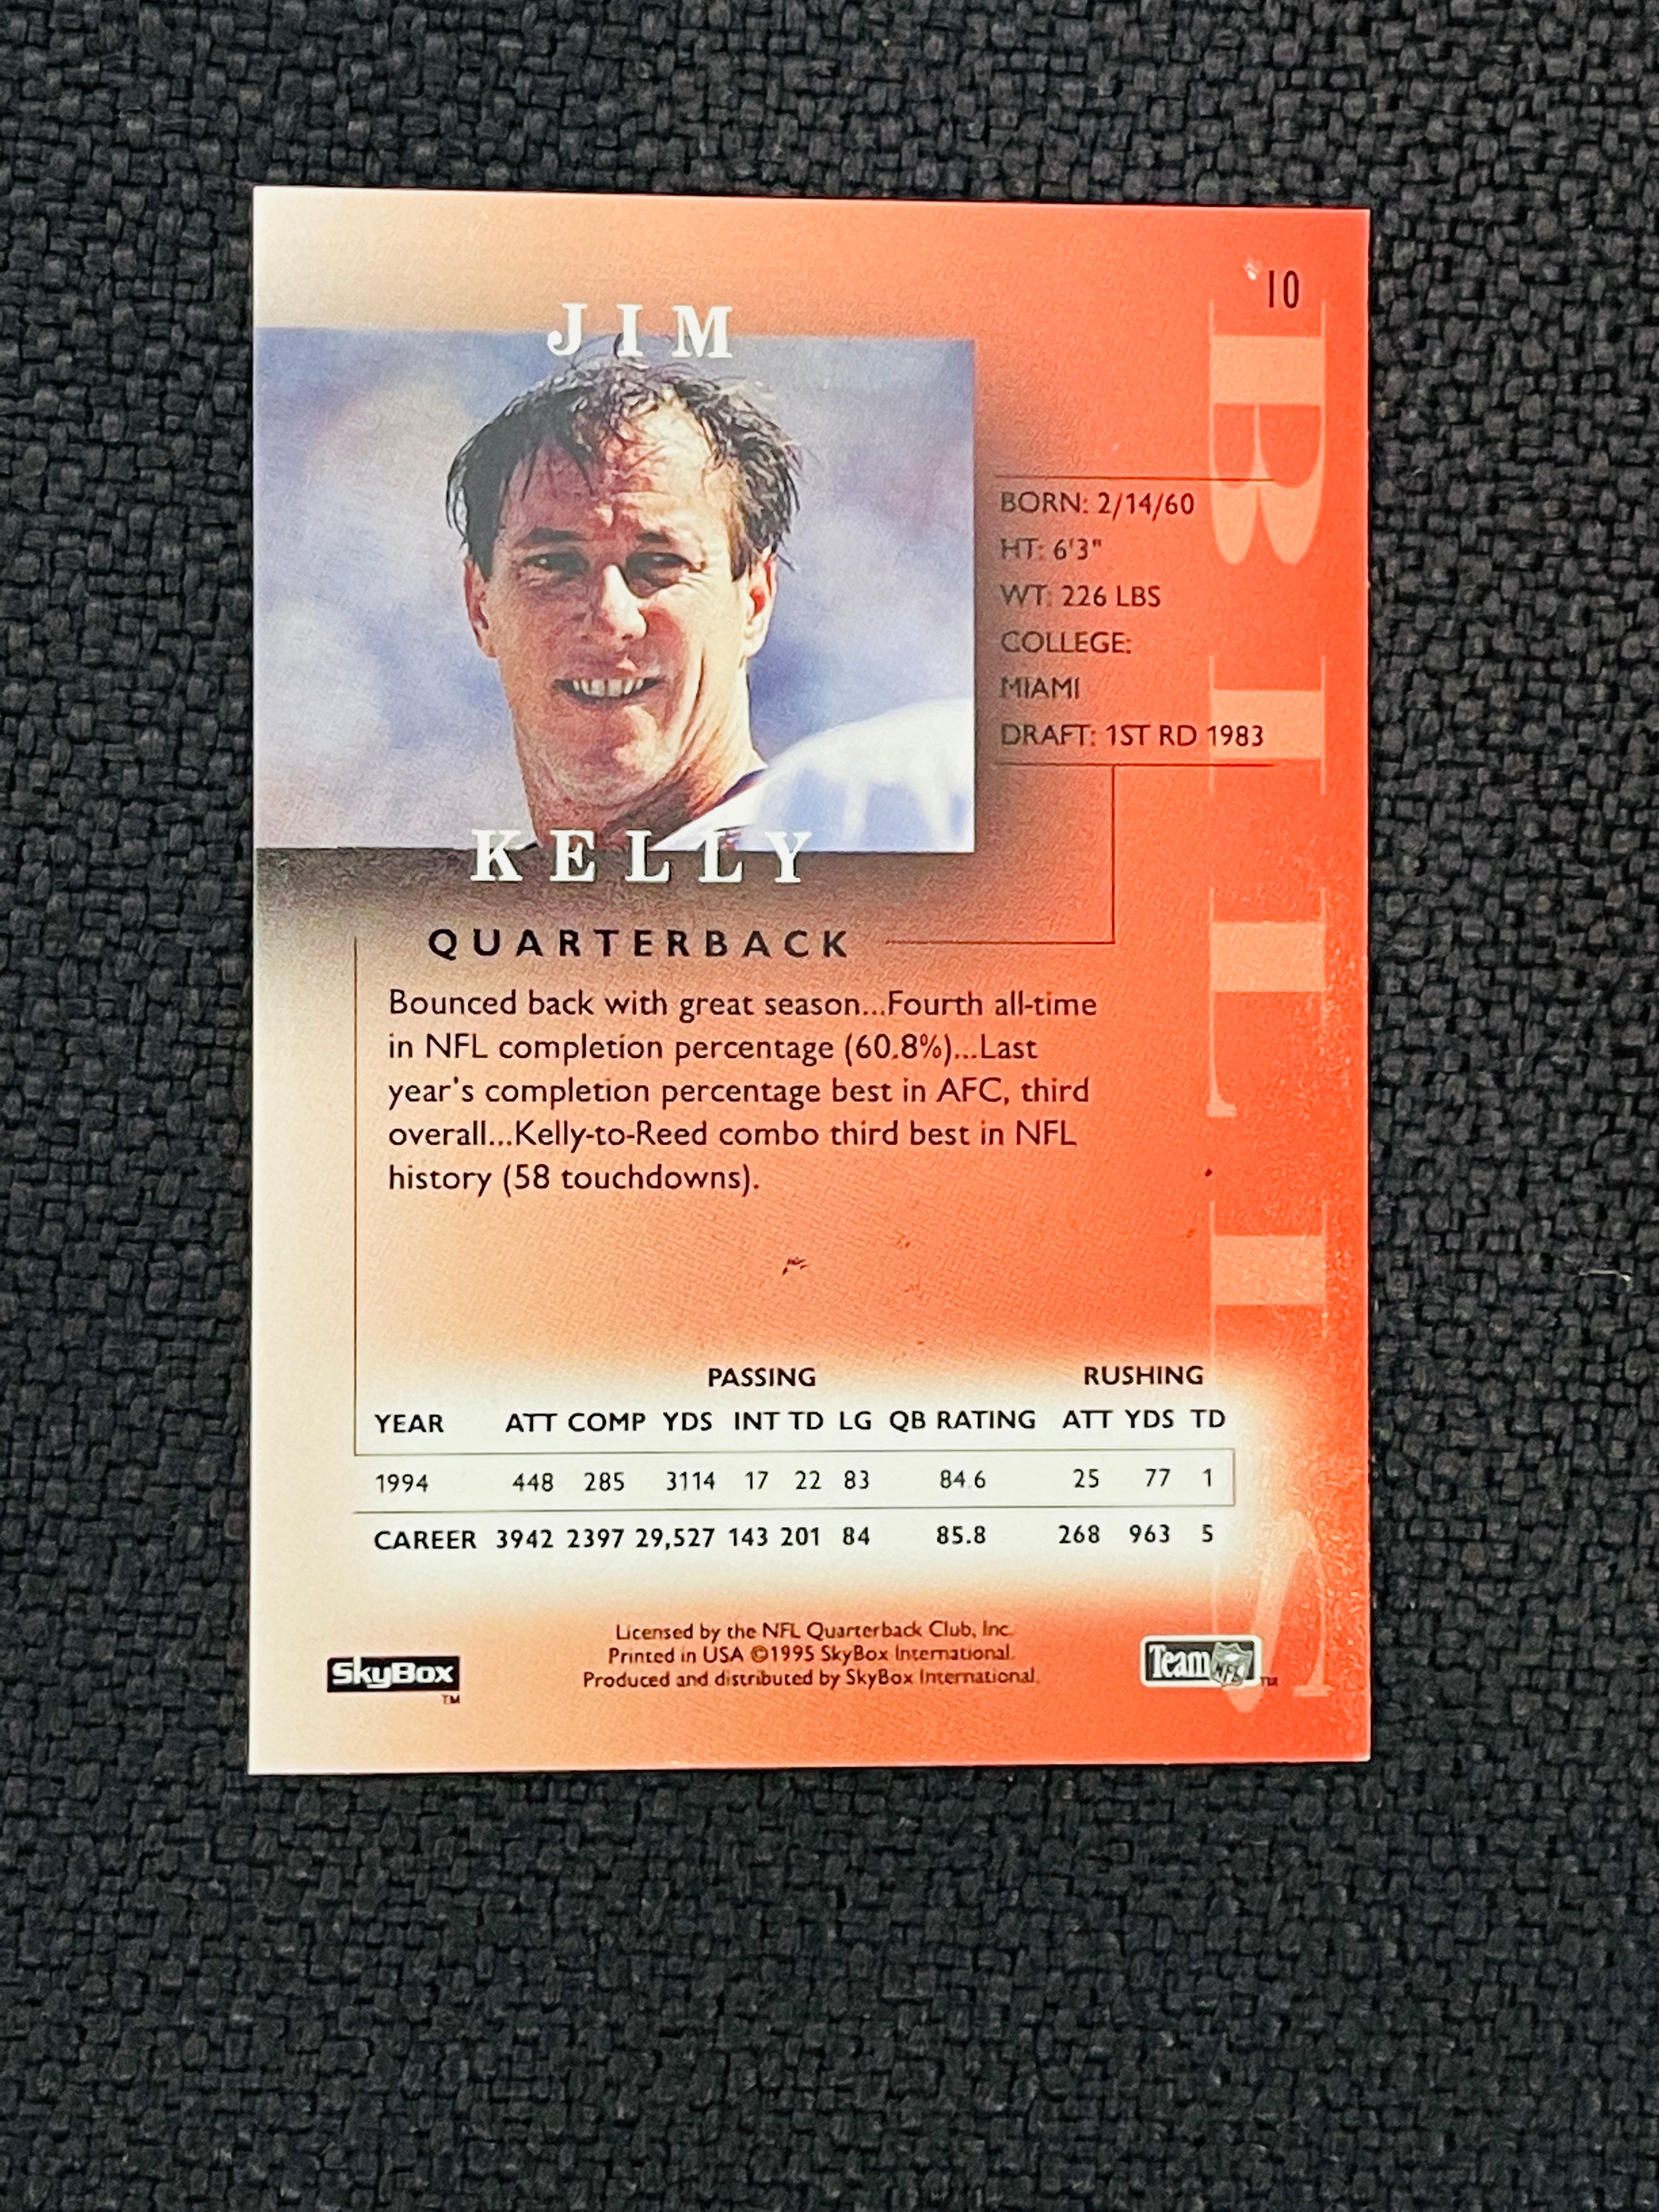 Buffalo Bills Jim Kelly autograph football rookie card with COA